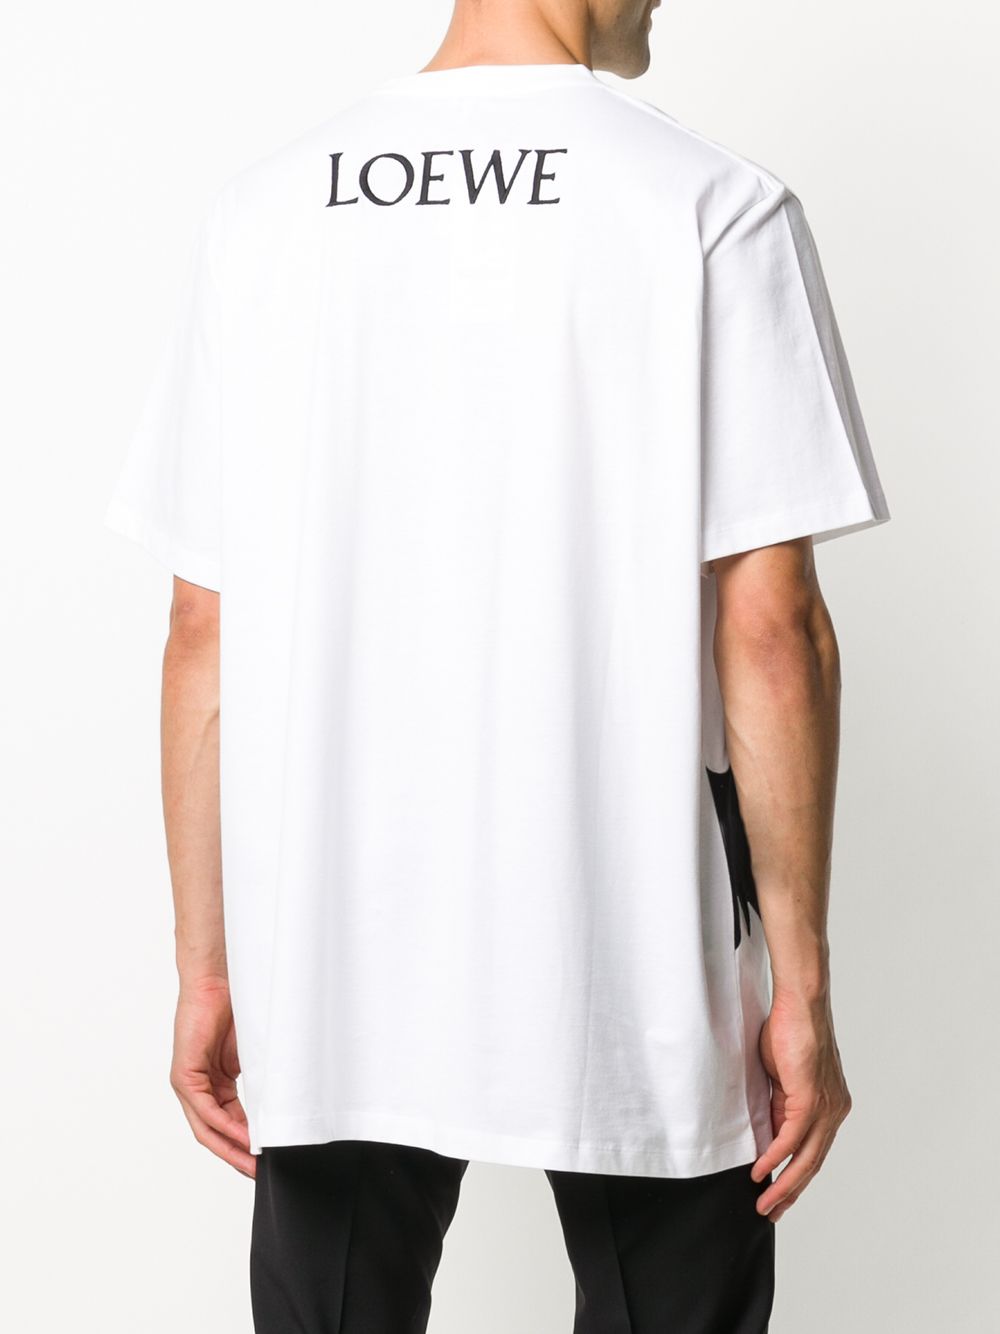 фото Loewe укороченная футболка с вышивкой anagram